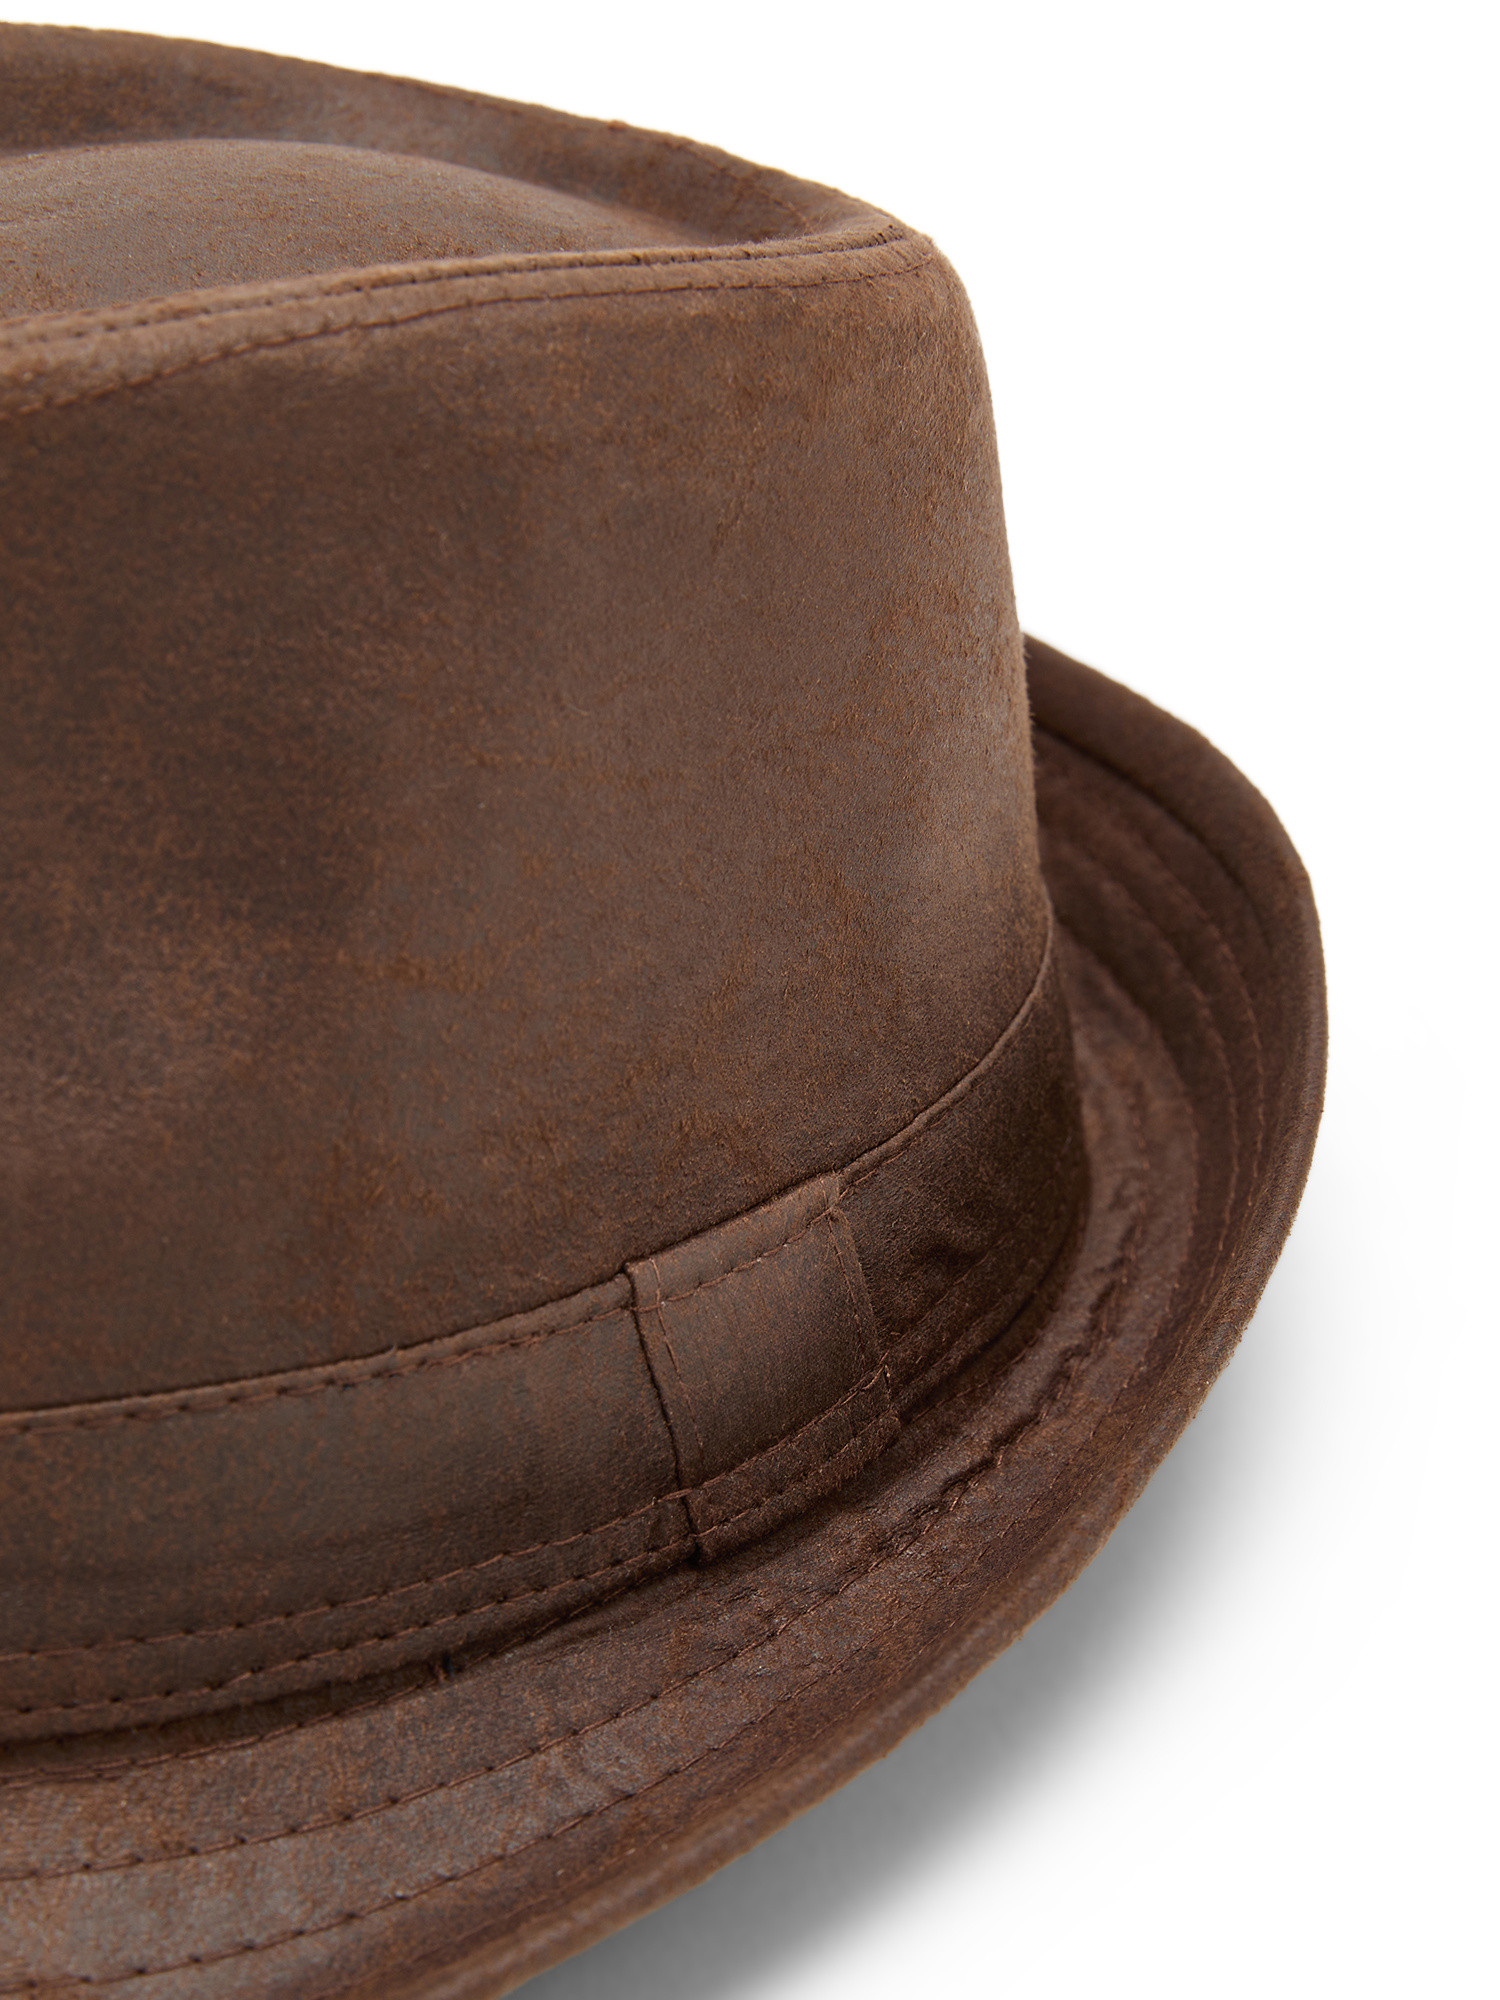 Luca D'Altieri - Alpine hat, Dark Brown, large image number 1